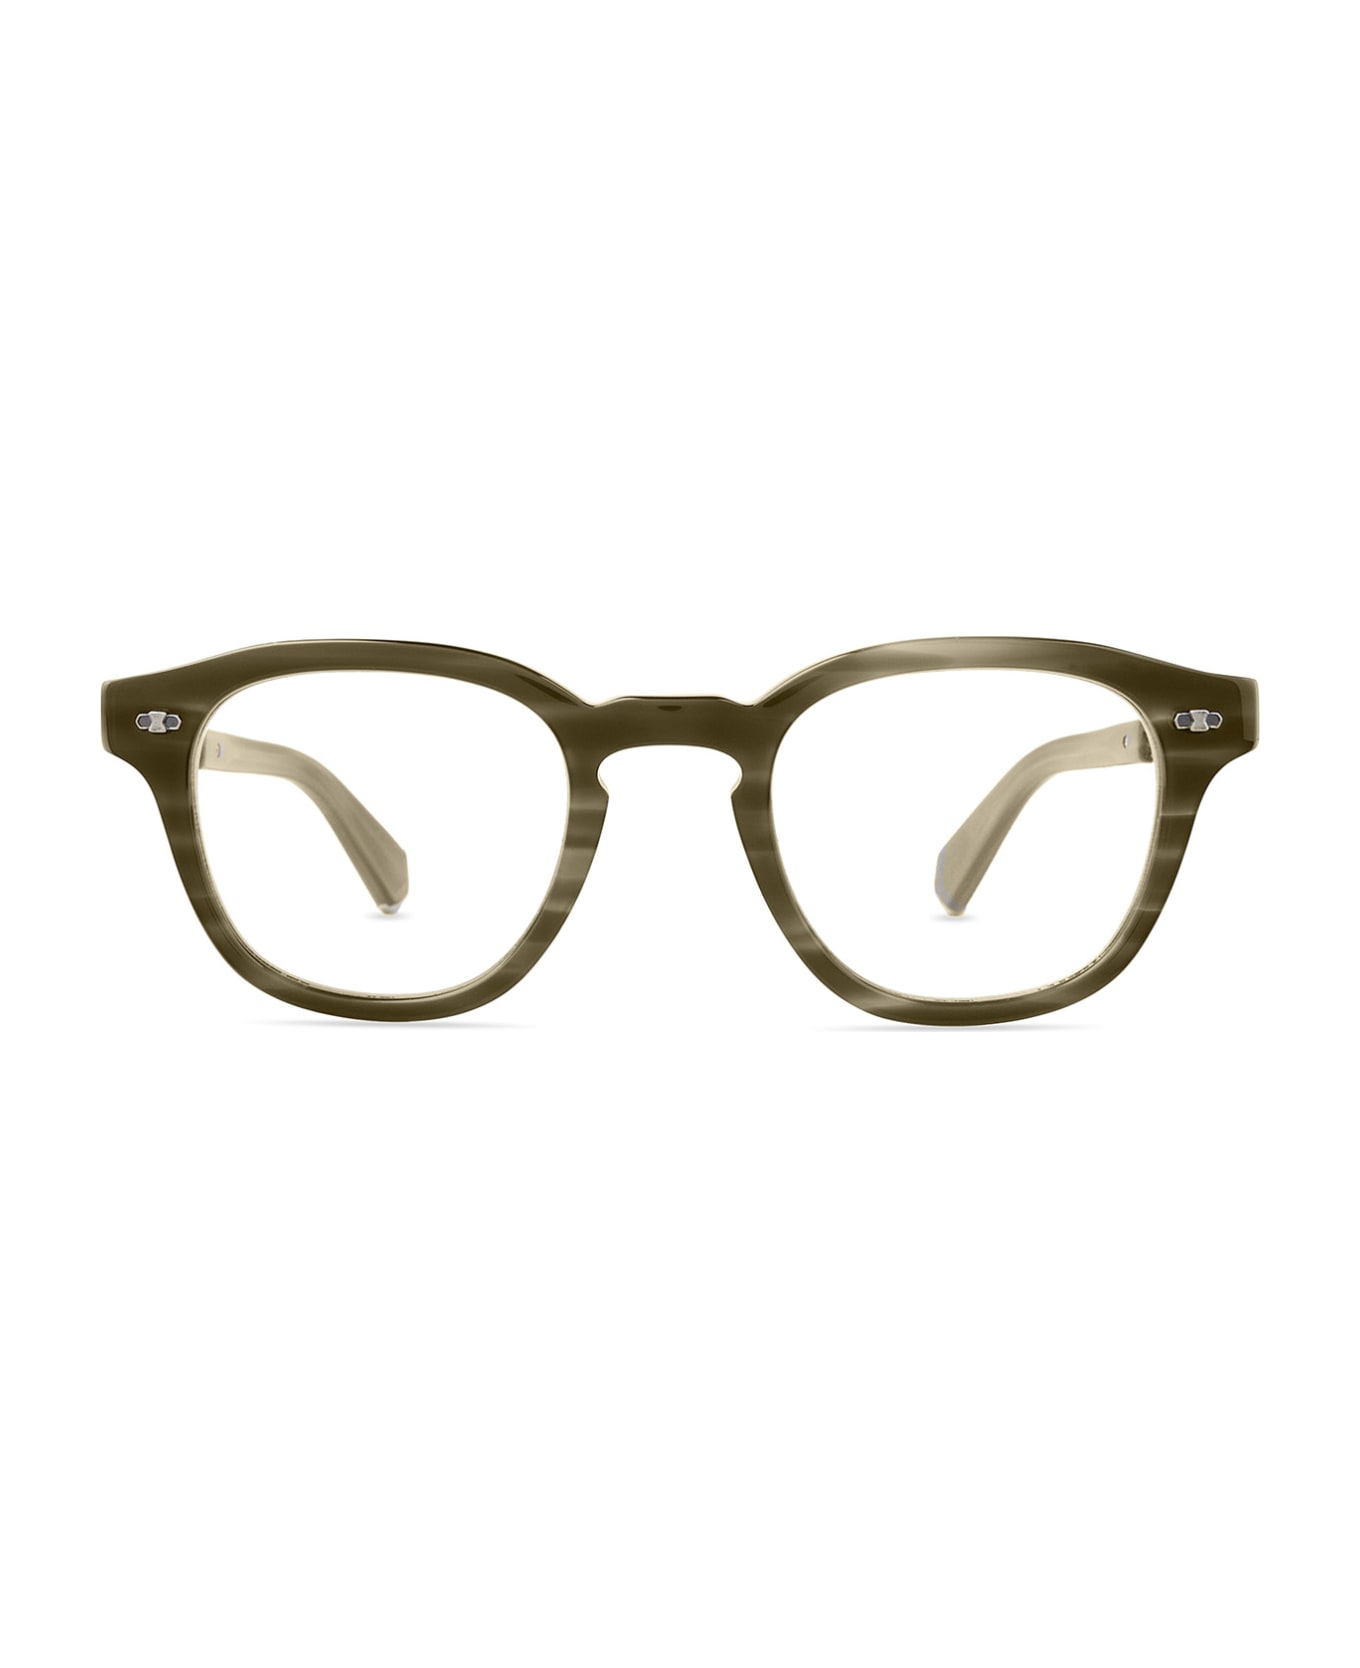 Mr. Leight James C Kelp-pewter Glasses - Kelp-Pewter アイウェア